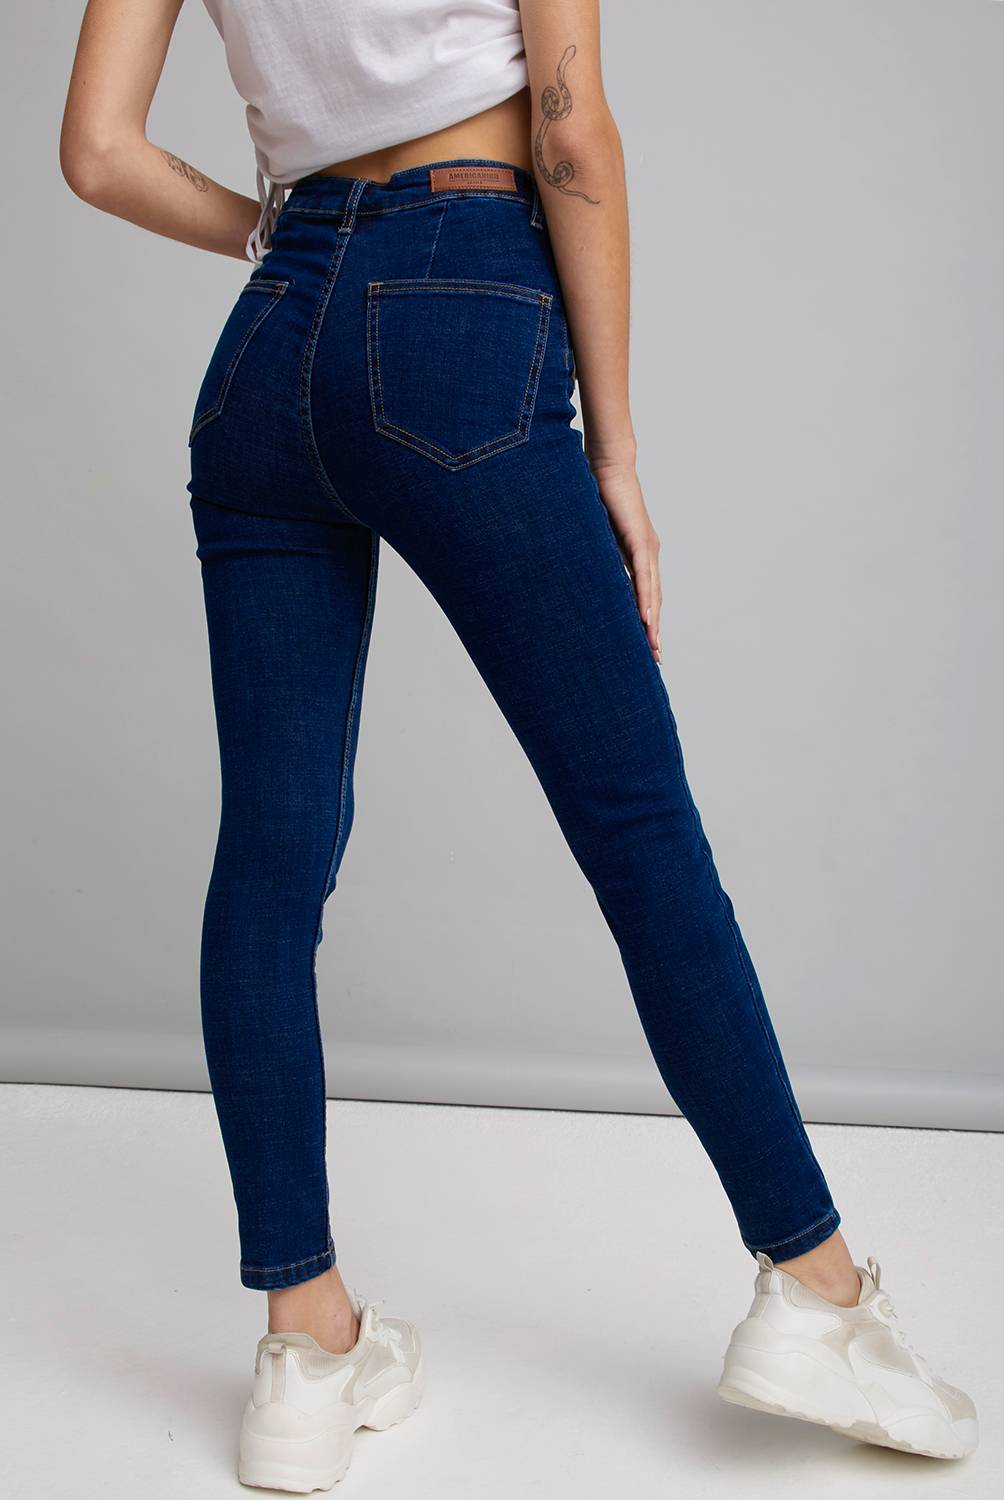 AMERICANINO - Jeans Skinny Super High